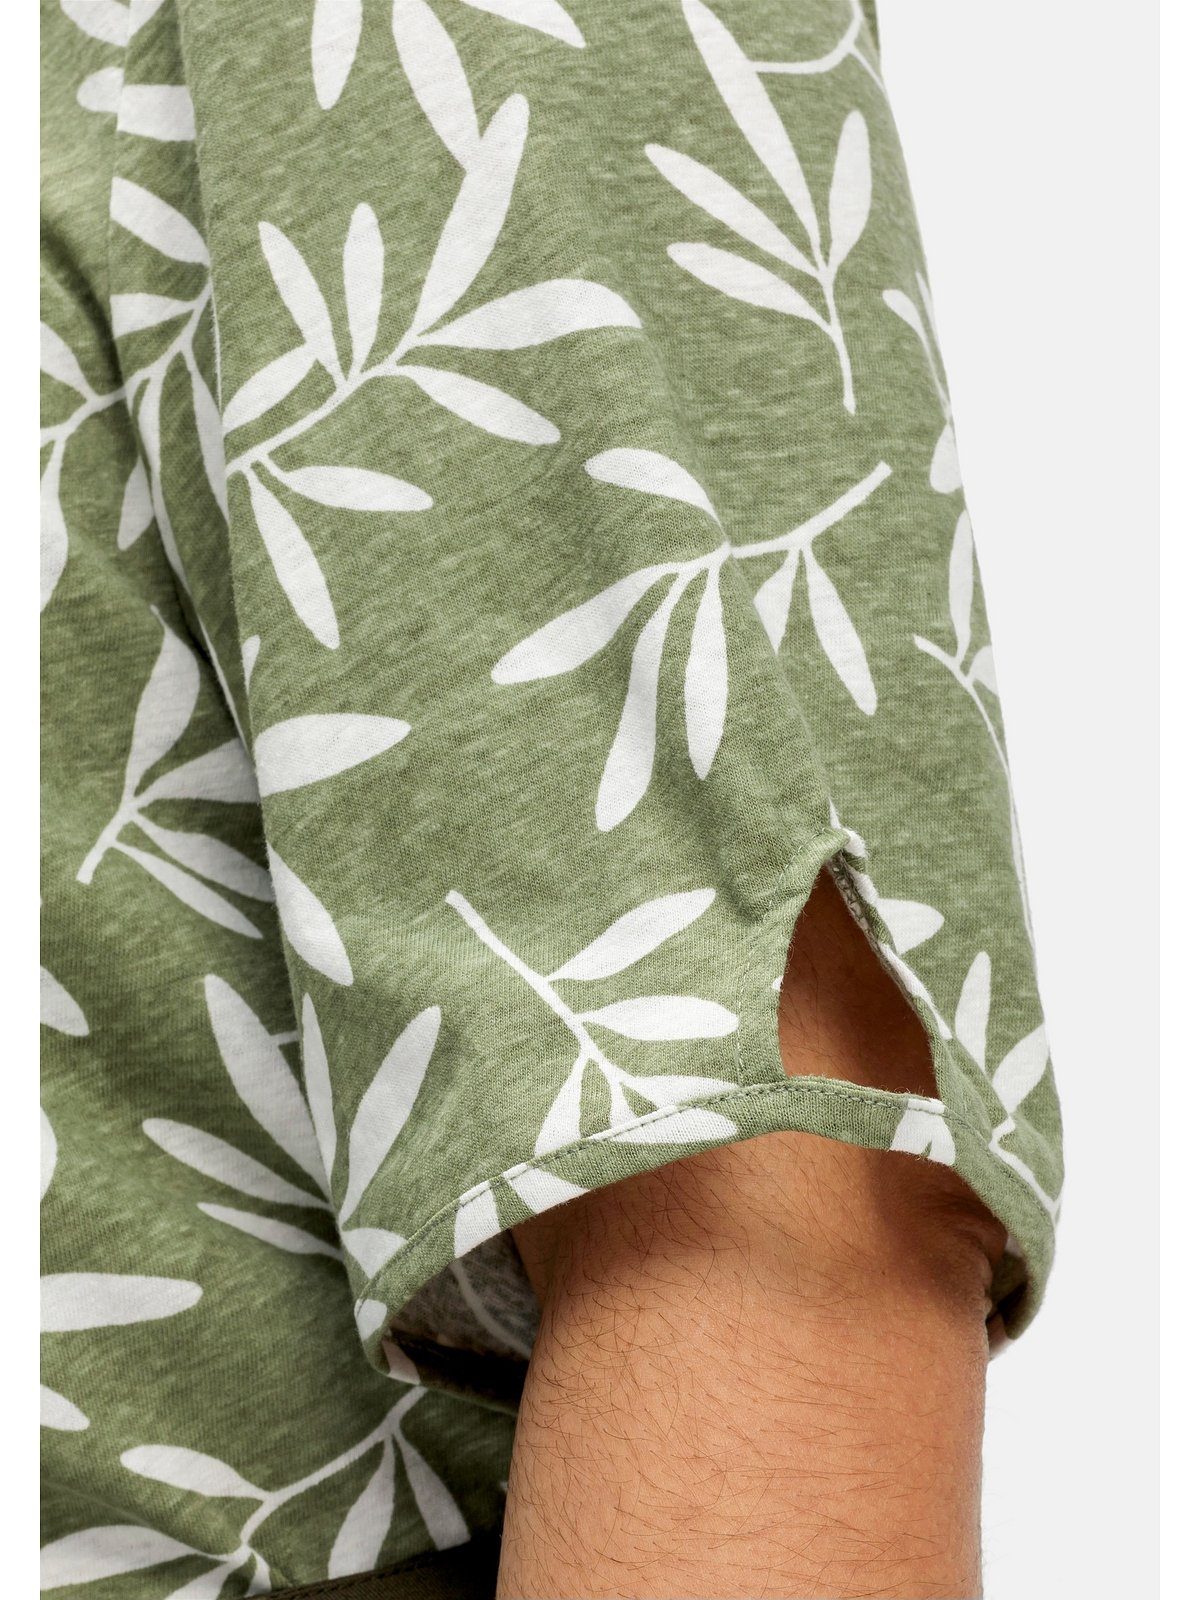 T-Shirt gemustert mit Sheego Blätterprint, im Größen Große Leinen-Mix khaki